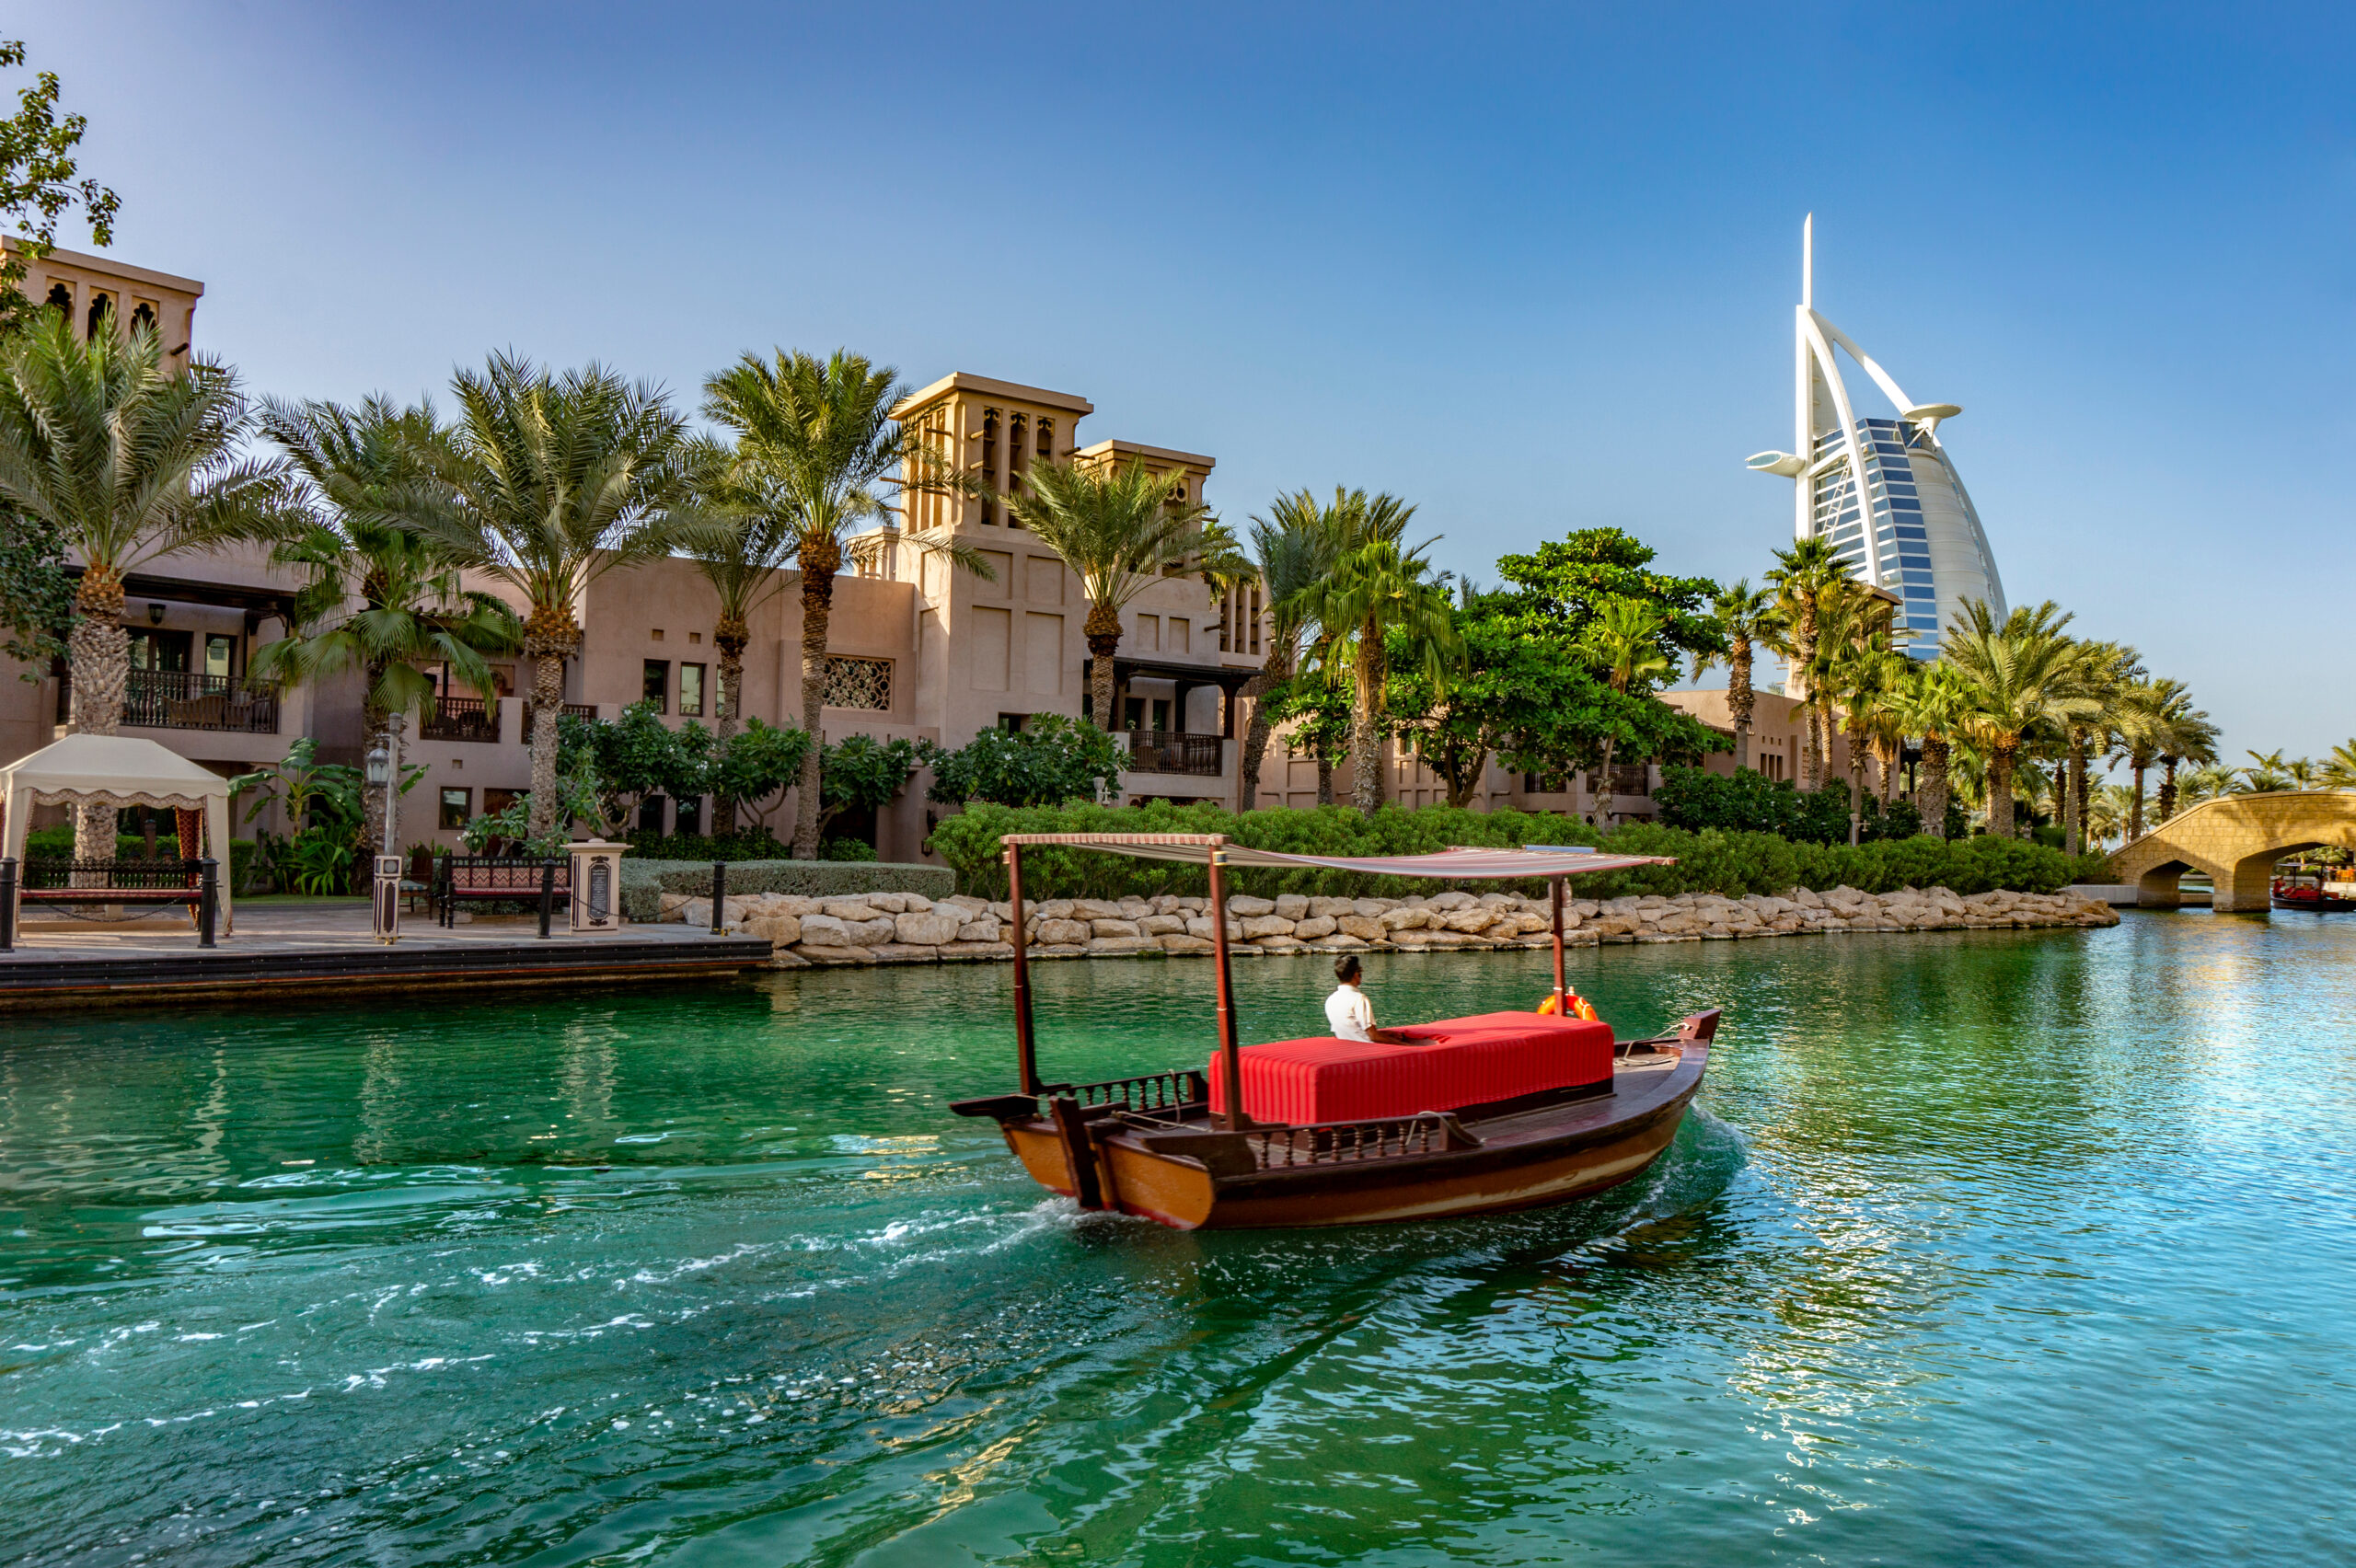 Dubai abra - Abra in Madinat Jumeirah